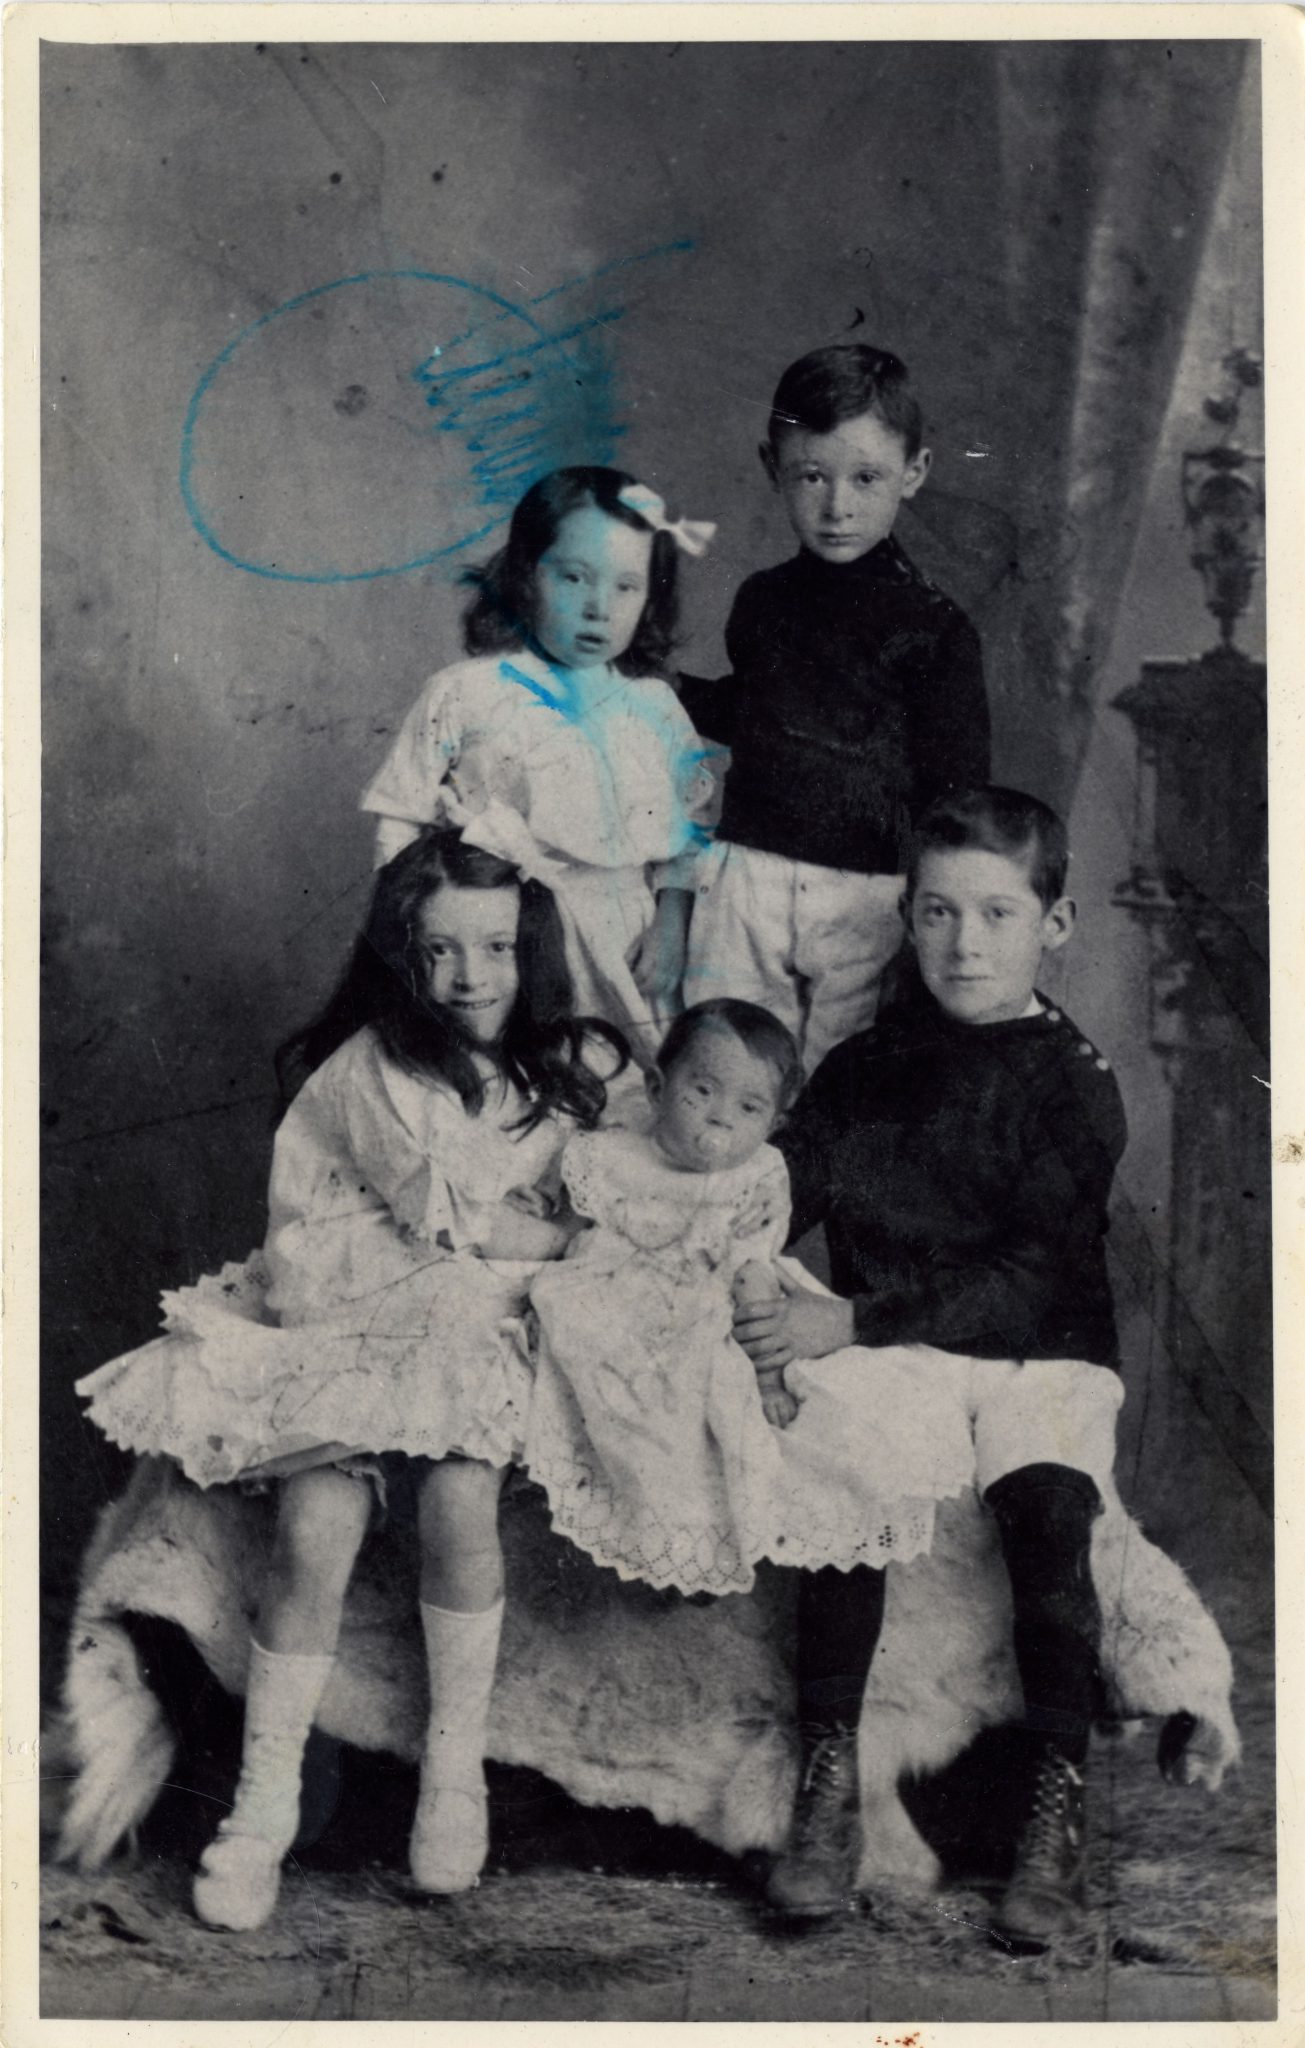 Sweiden family portrait